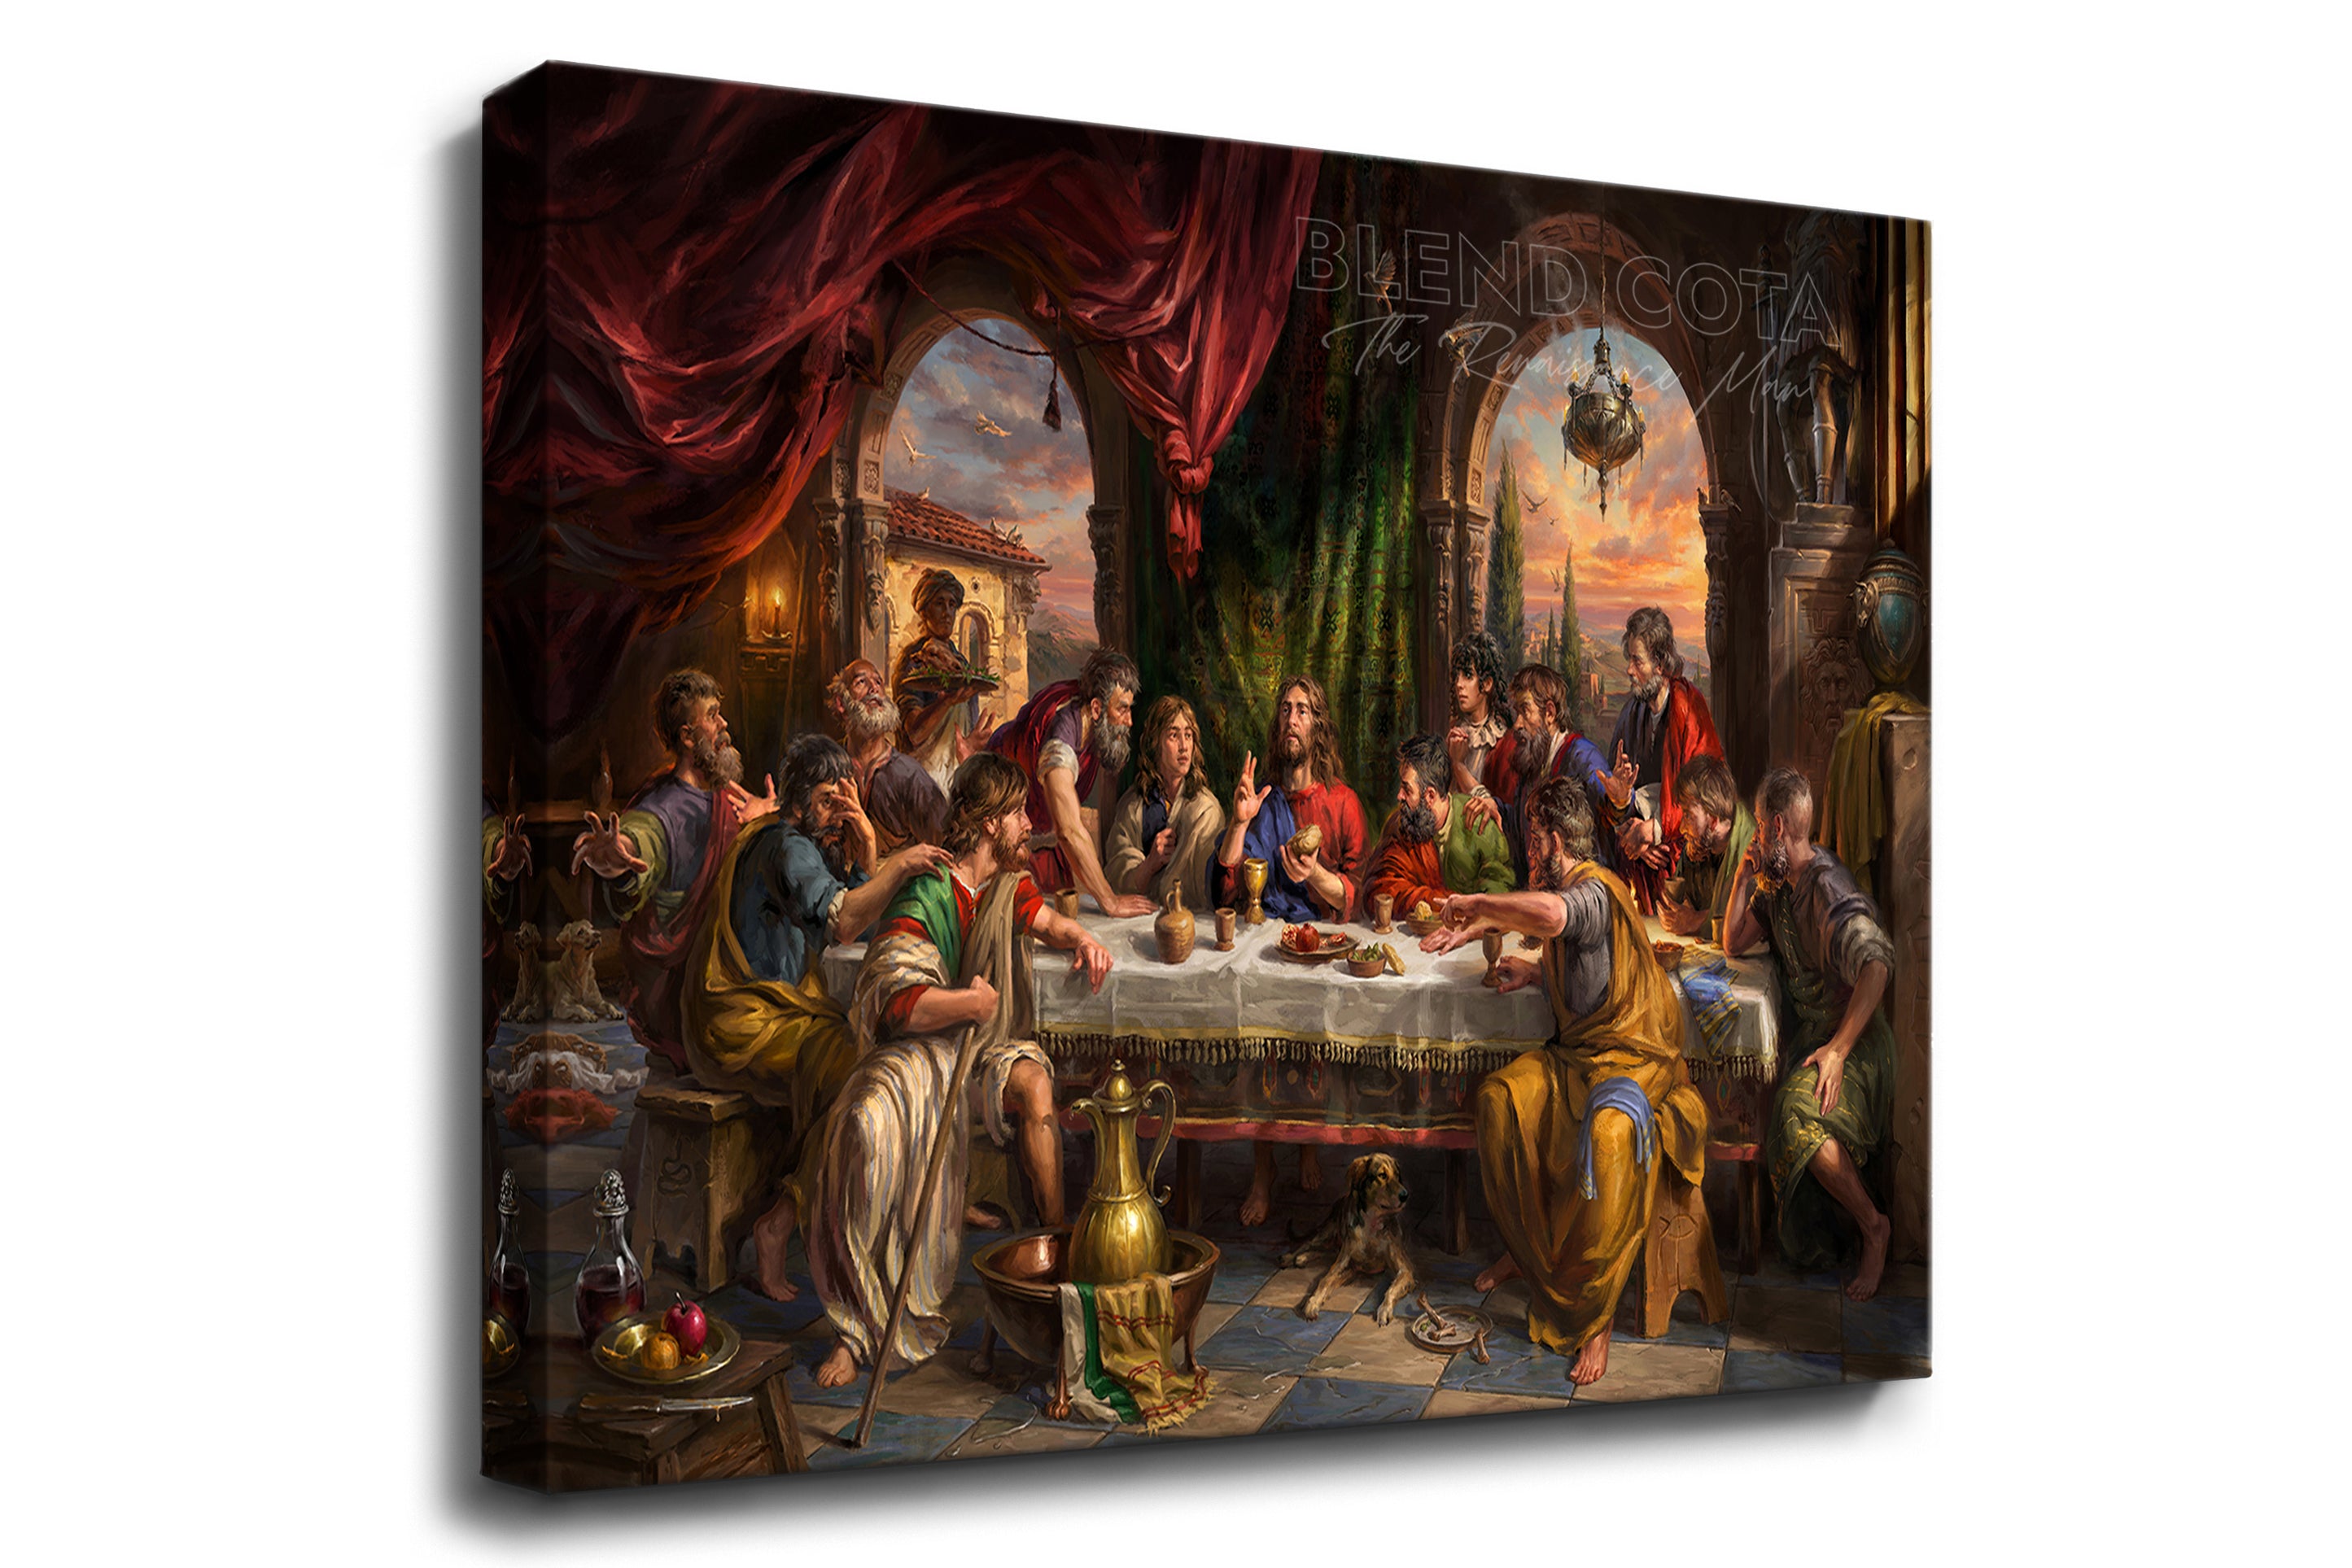 The Last Supper - Blend Cota Art Print on Canvas - Blend Cota Studios